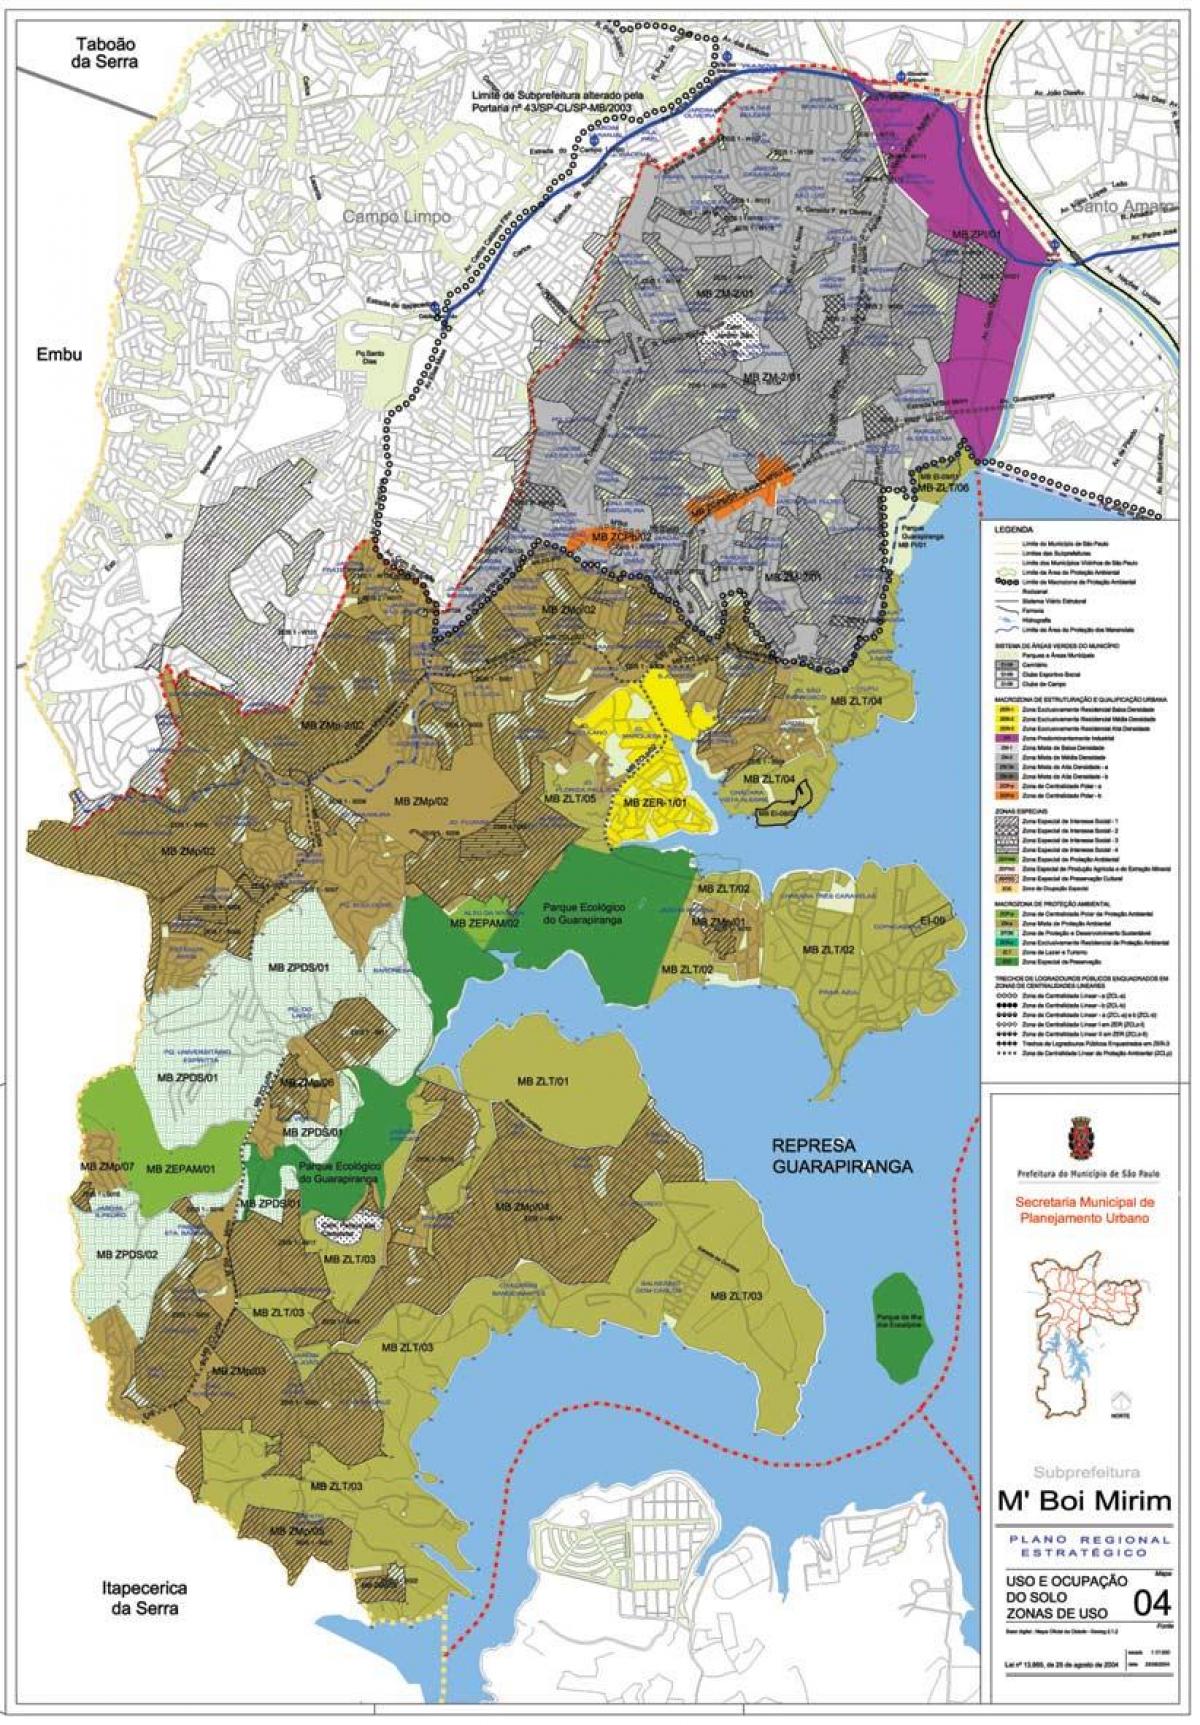 نقشه مبی میریم São Paulo - اشغال خاک